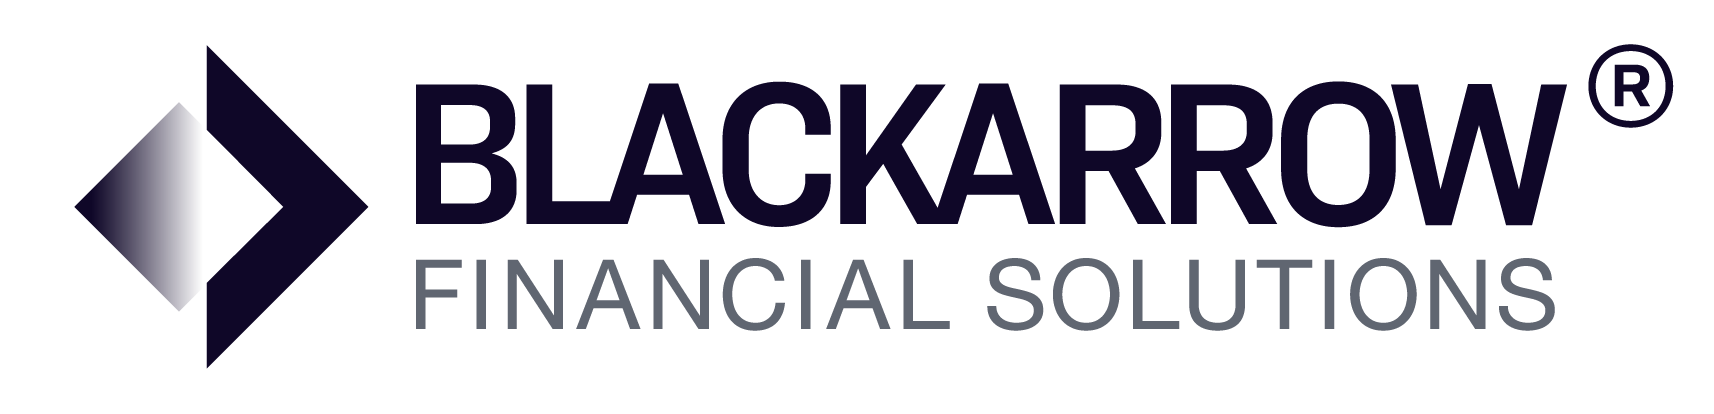 Black Arrow Financial Solutions Ltd.